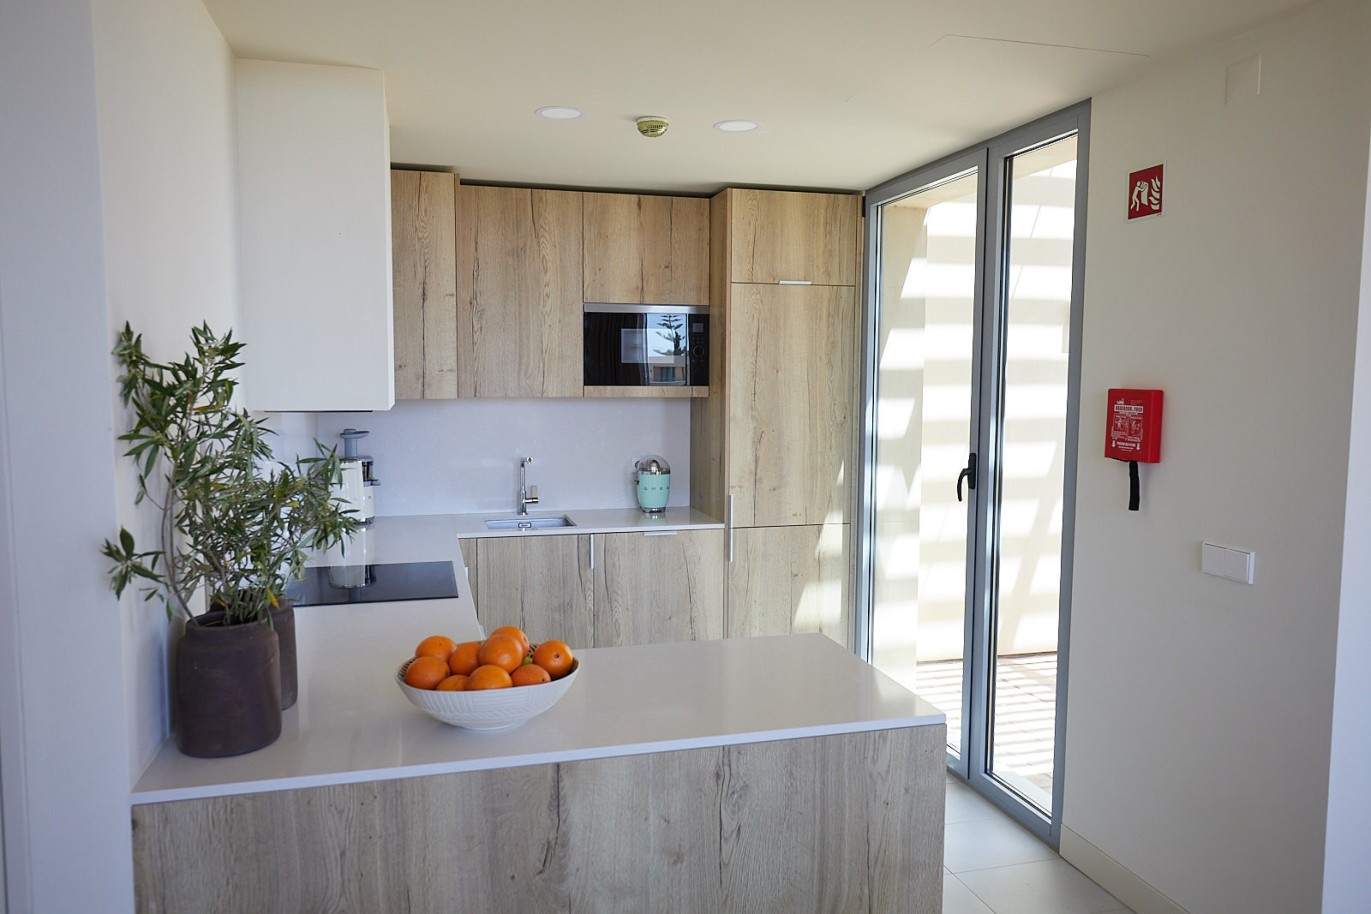 2 bedroom apartment in resort, for sale in Porches, Algarve_230788